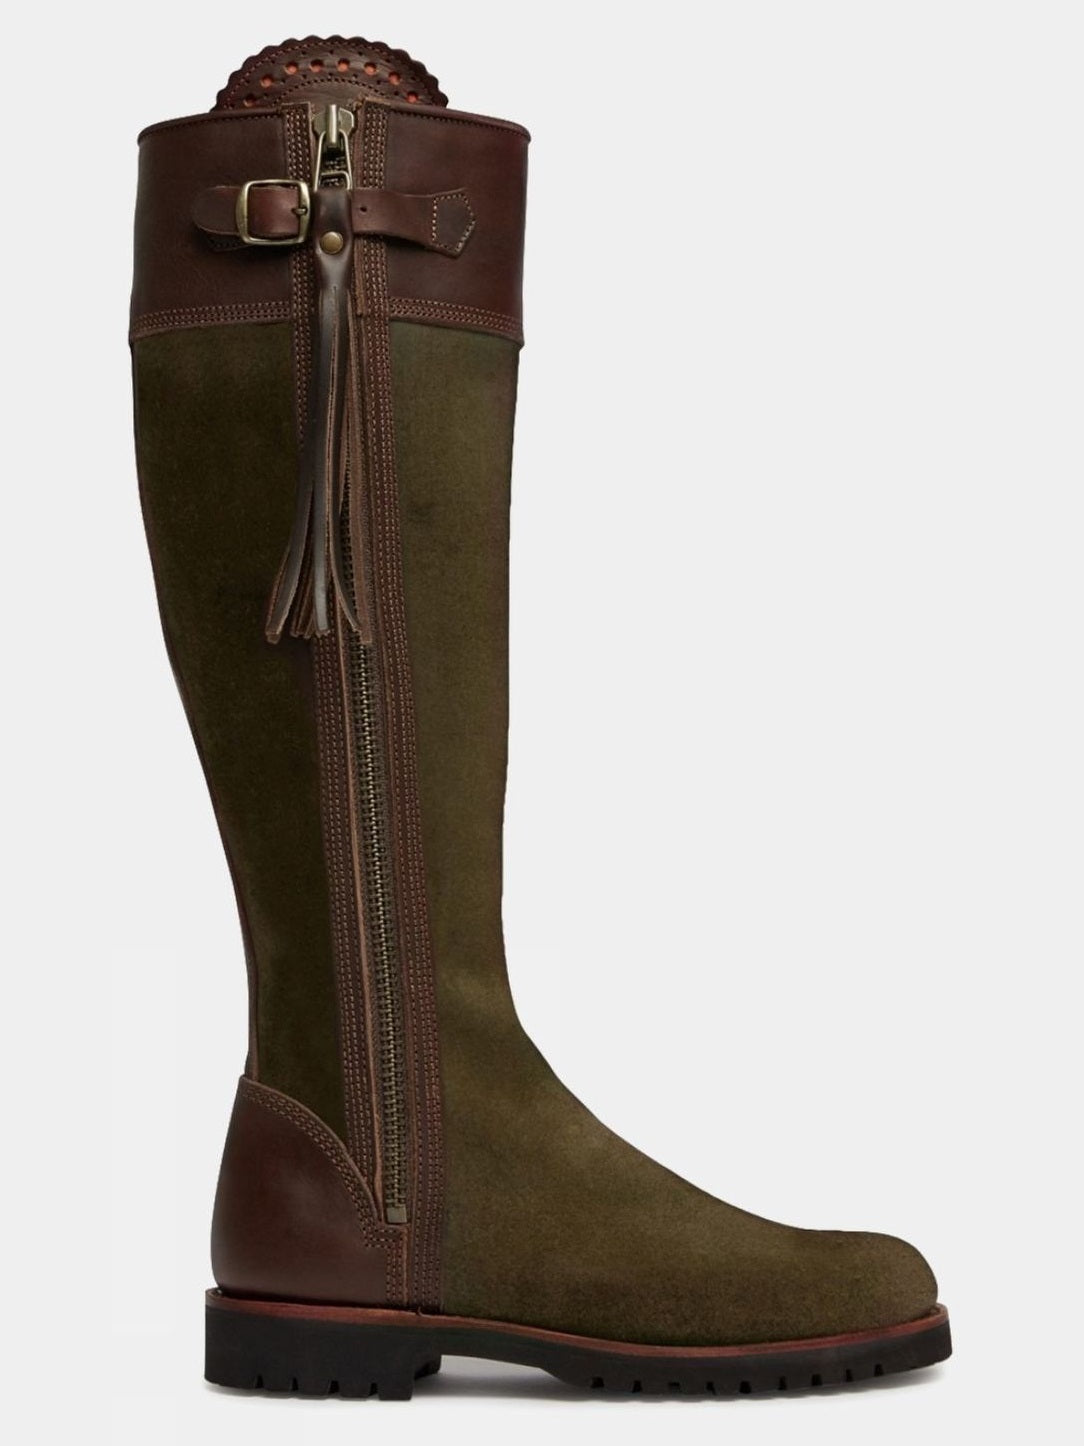 PENELOPE CHILVERS Inclement Tassel Boots - Womens Waterproof Suede - Seaweed/Conker